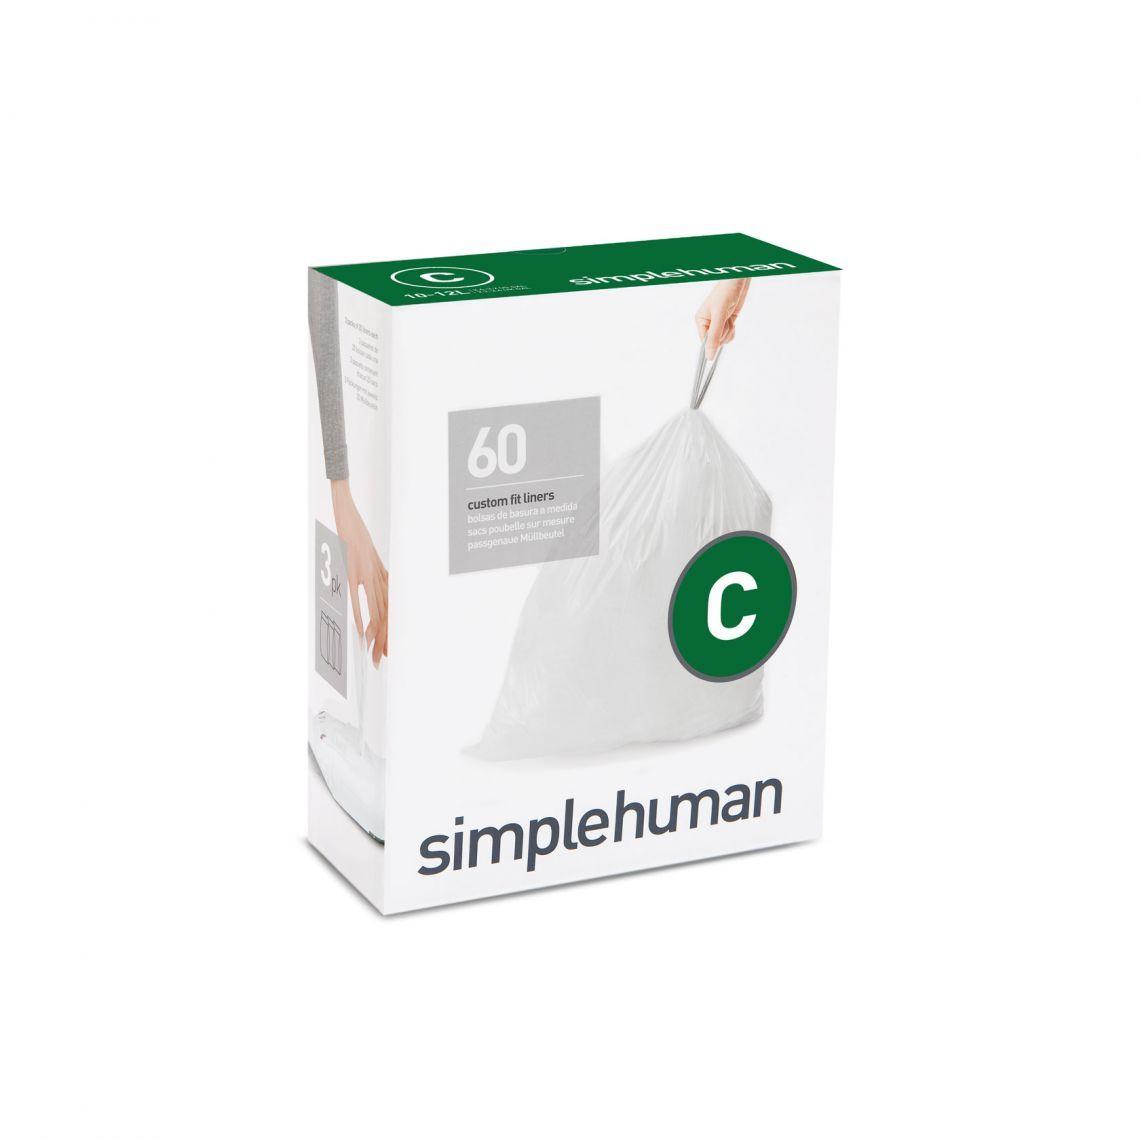 Simplehuman Logo - code C, custom fit can liners, 3 packs of 20